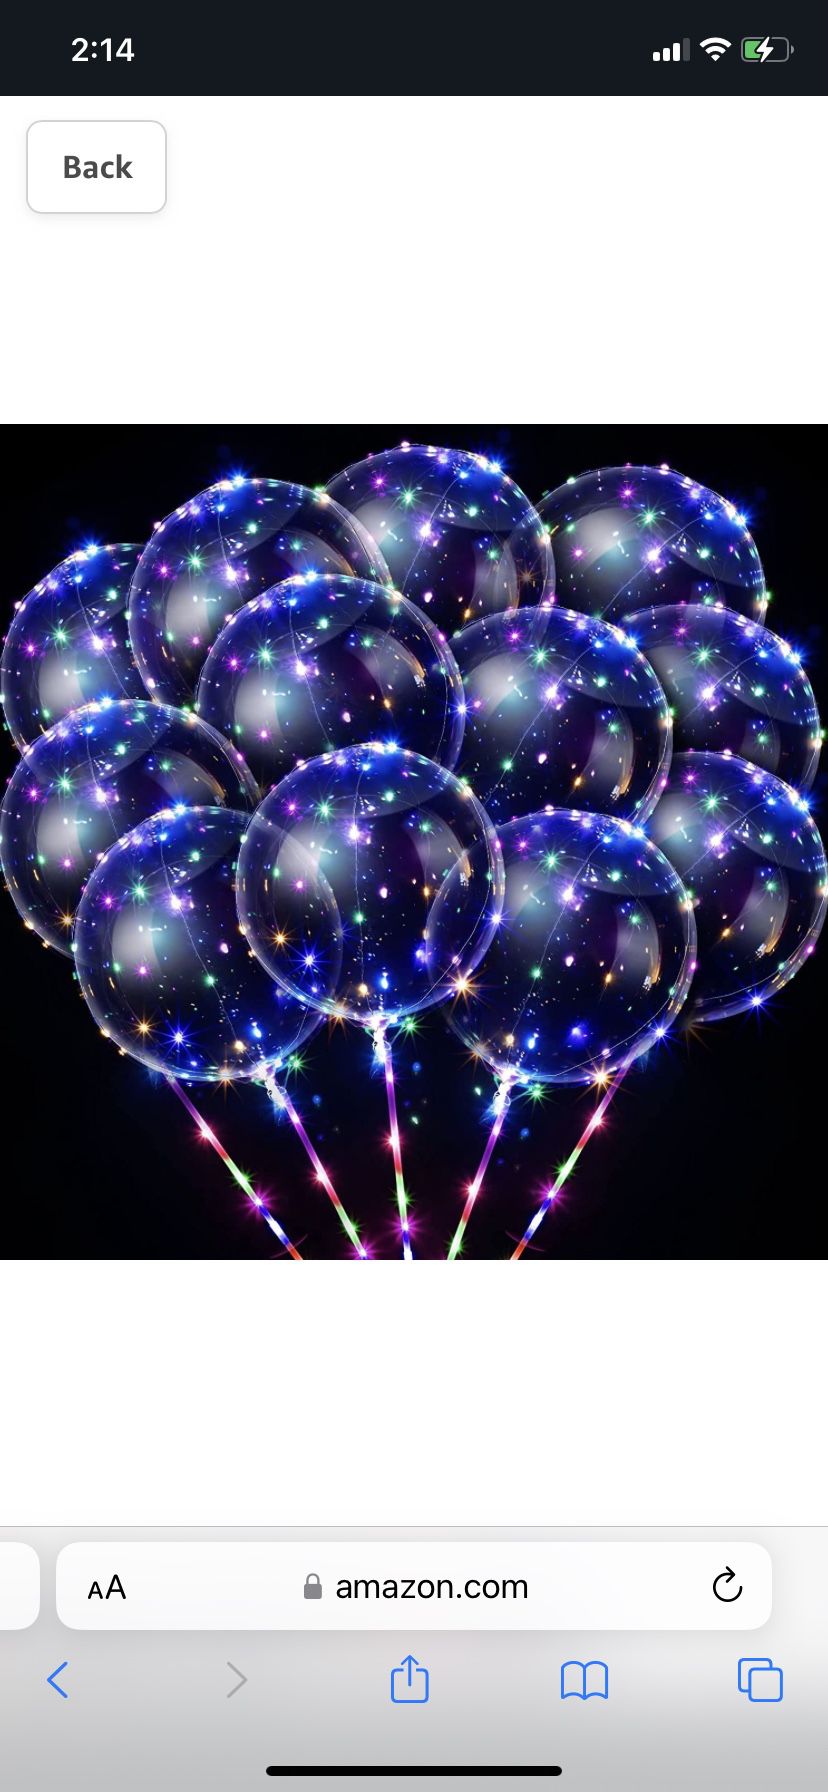 Deco Art Birthday Gift Balloons Party Supplies Wedding 